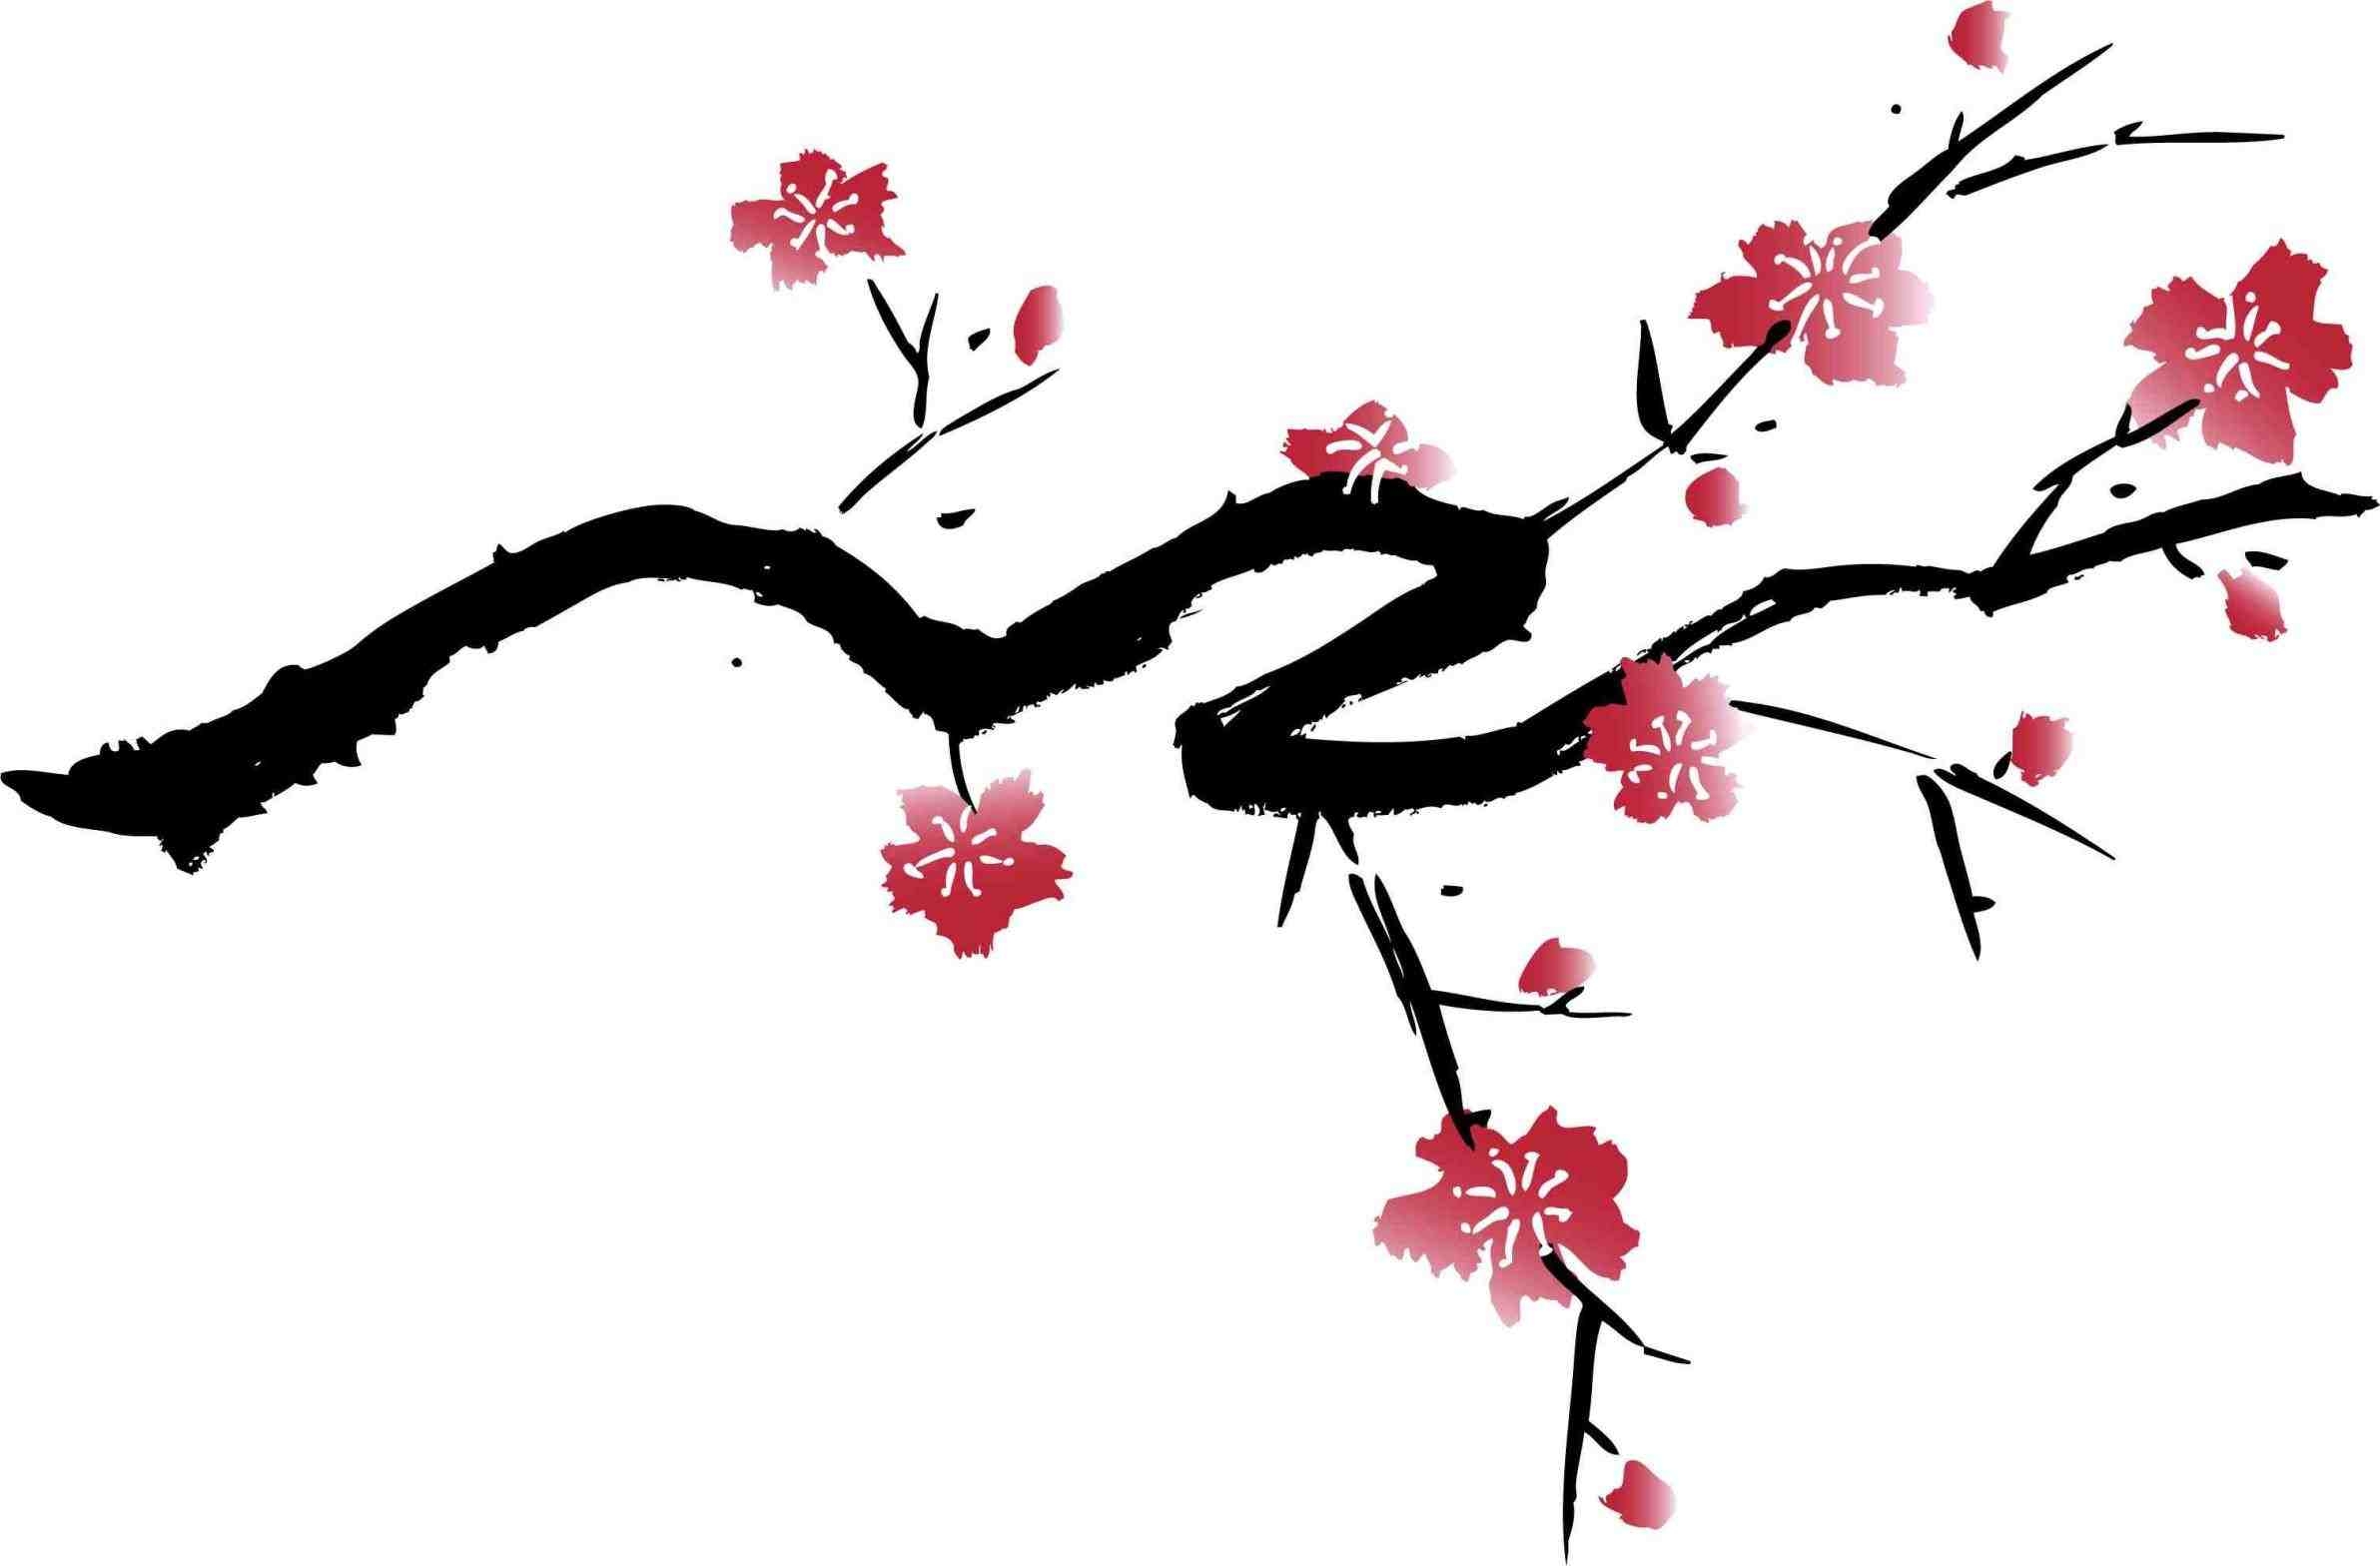 Clip Arts Related To : Cherry blossom Plum blossom Clip art - Vector ...